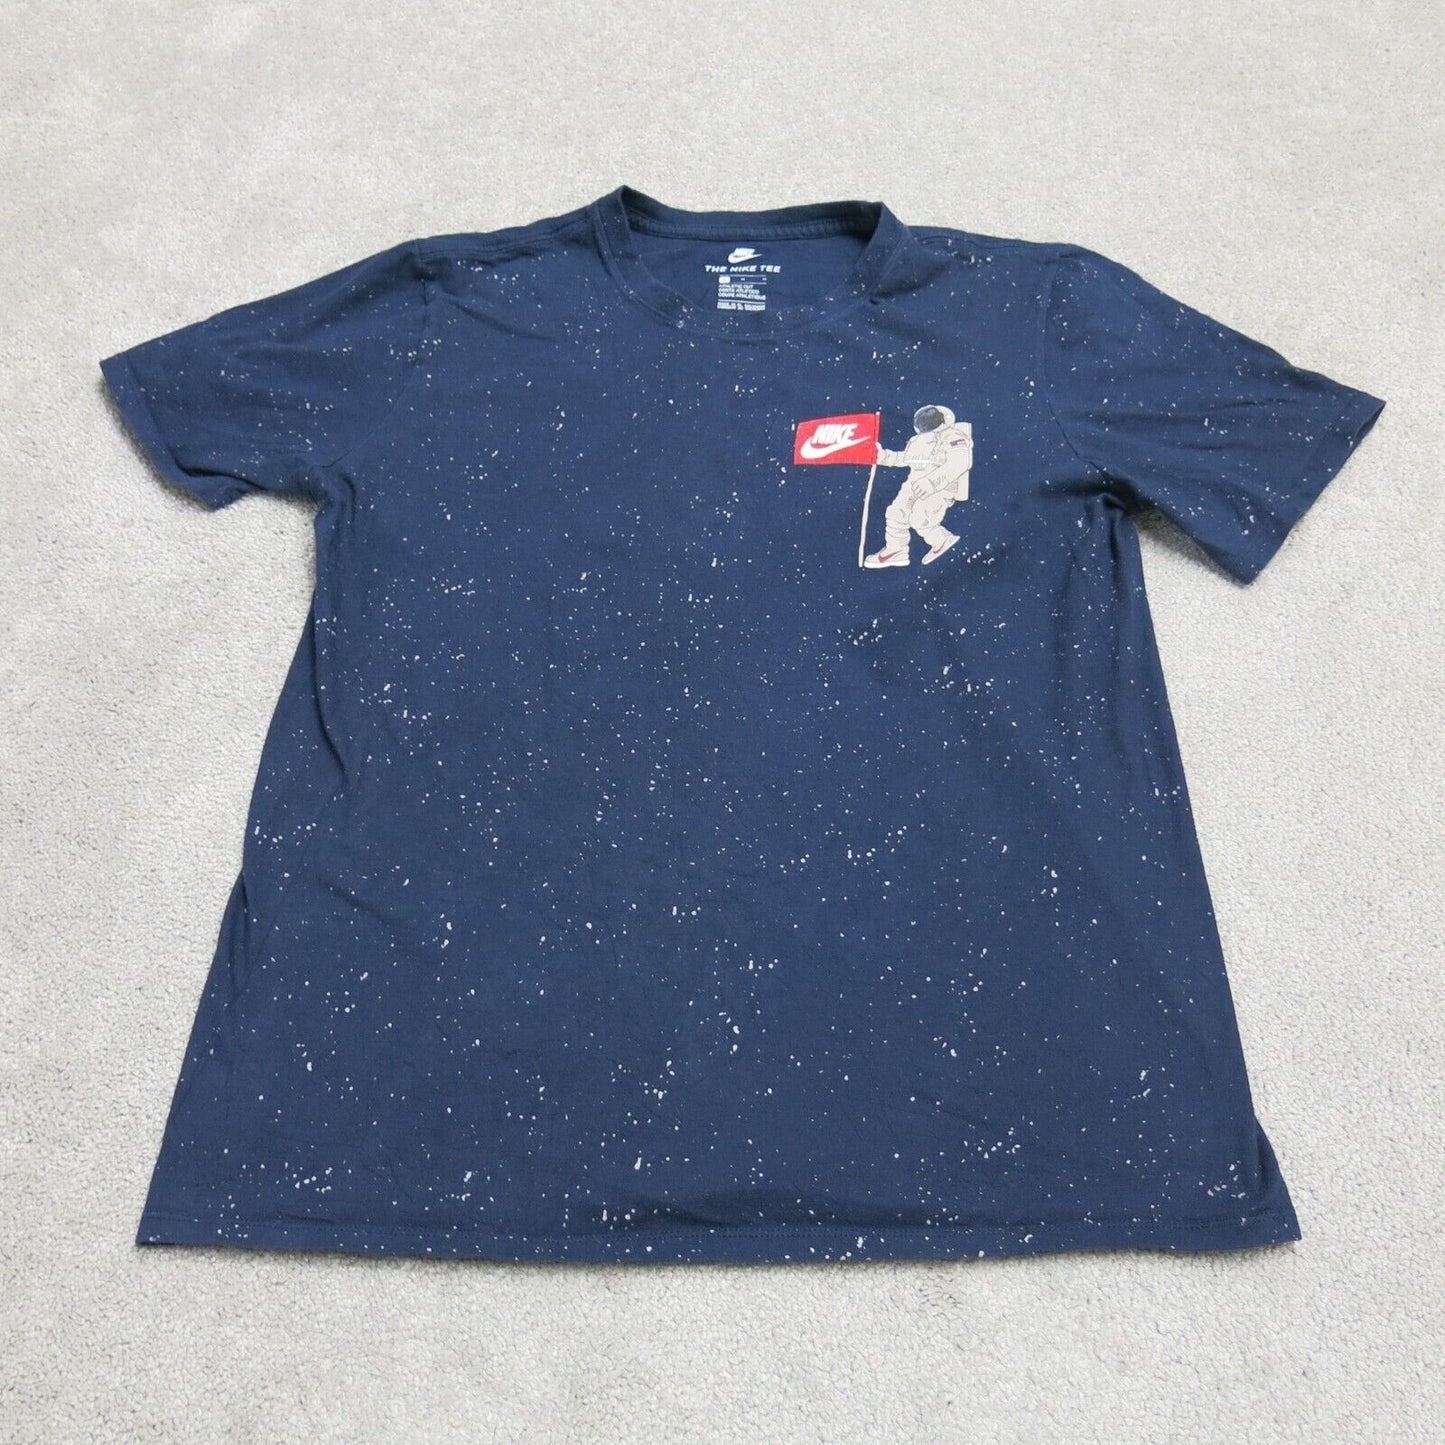 The Nike Tee Mens Crew Neck T Shirt Athletic Cut Short Sleeve Blue Size Medium